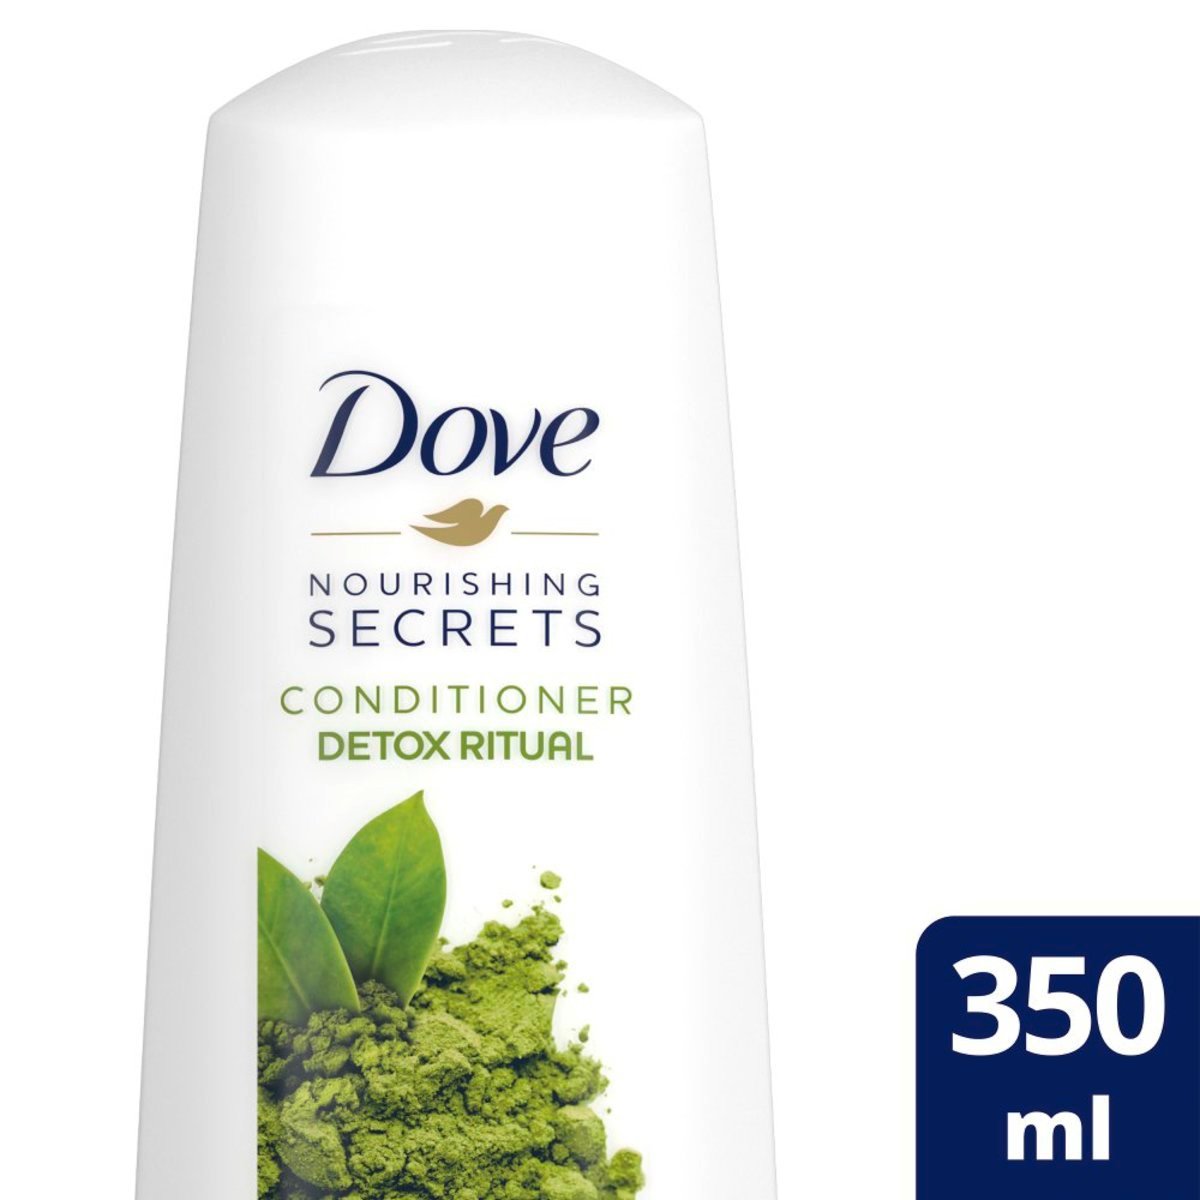 Dove Nourishing Secrets Conditioner Detox Ritual- Matcha and Rice Milk 350 ml